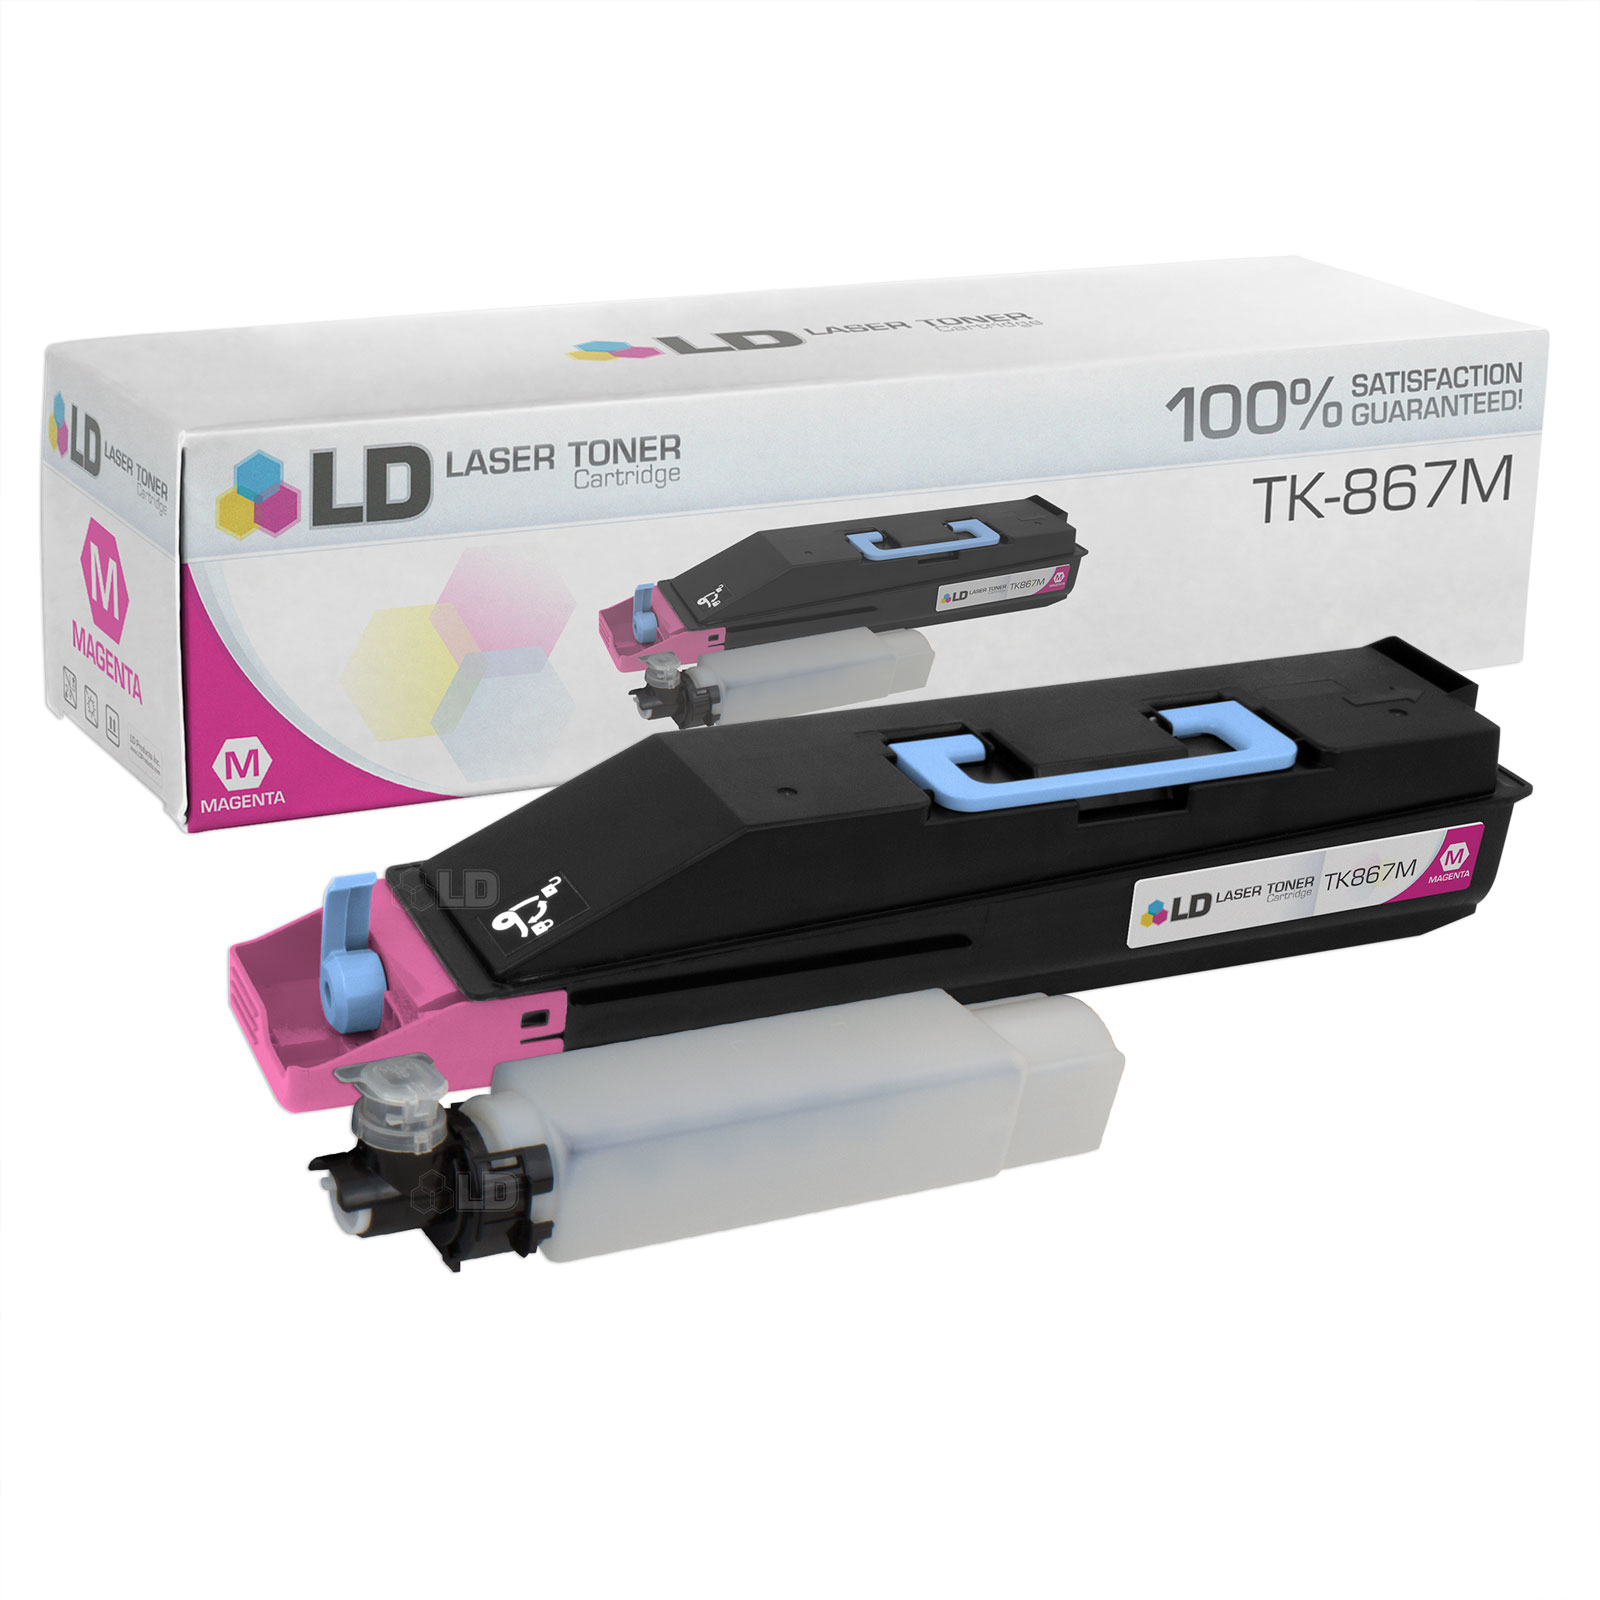 LD Compatible Replacement for Kyocera Mita TK-867M Magenta Laser Toner Cartridge for use in Kyocera Mita TASKalfa 250ci, and 300ci s - image 1 of 1